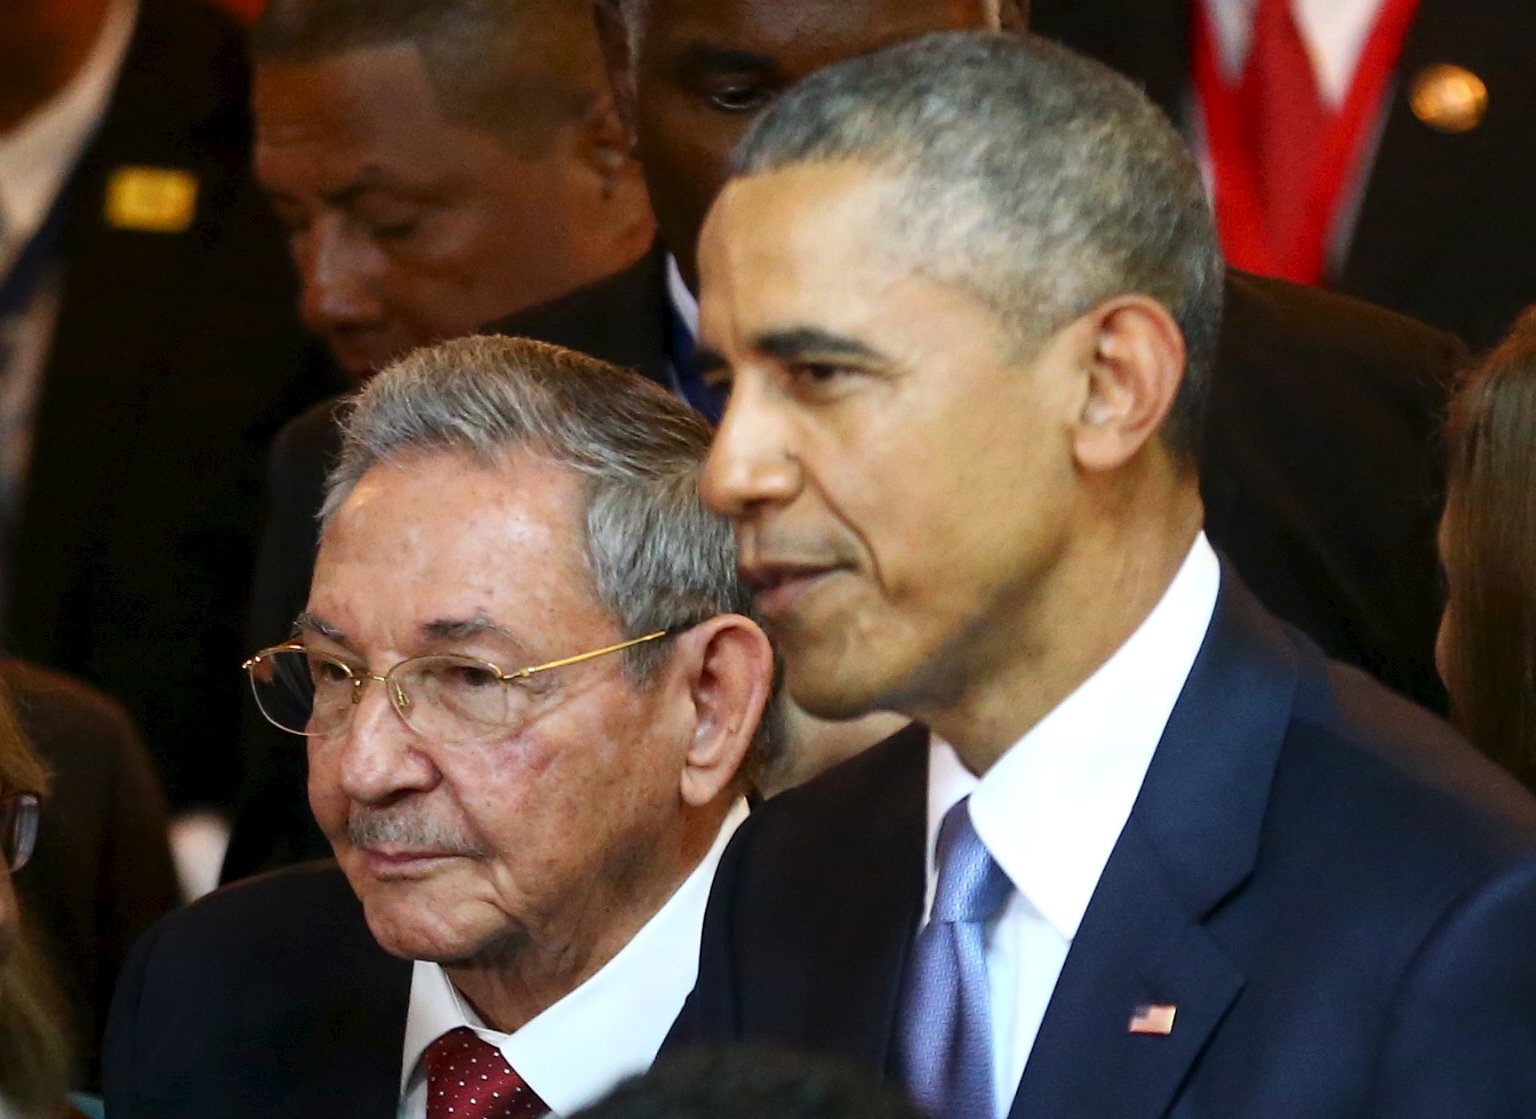 Obama, Castro shake hands as US, Cuba seek better ties